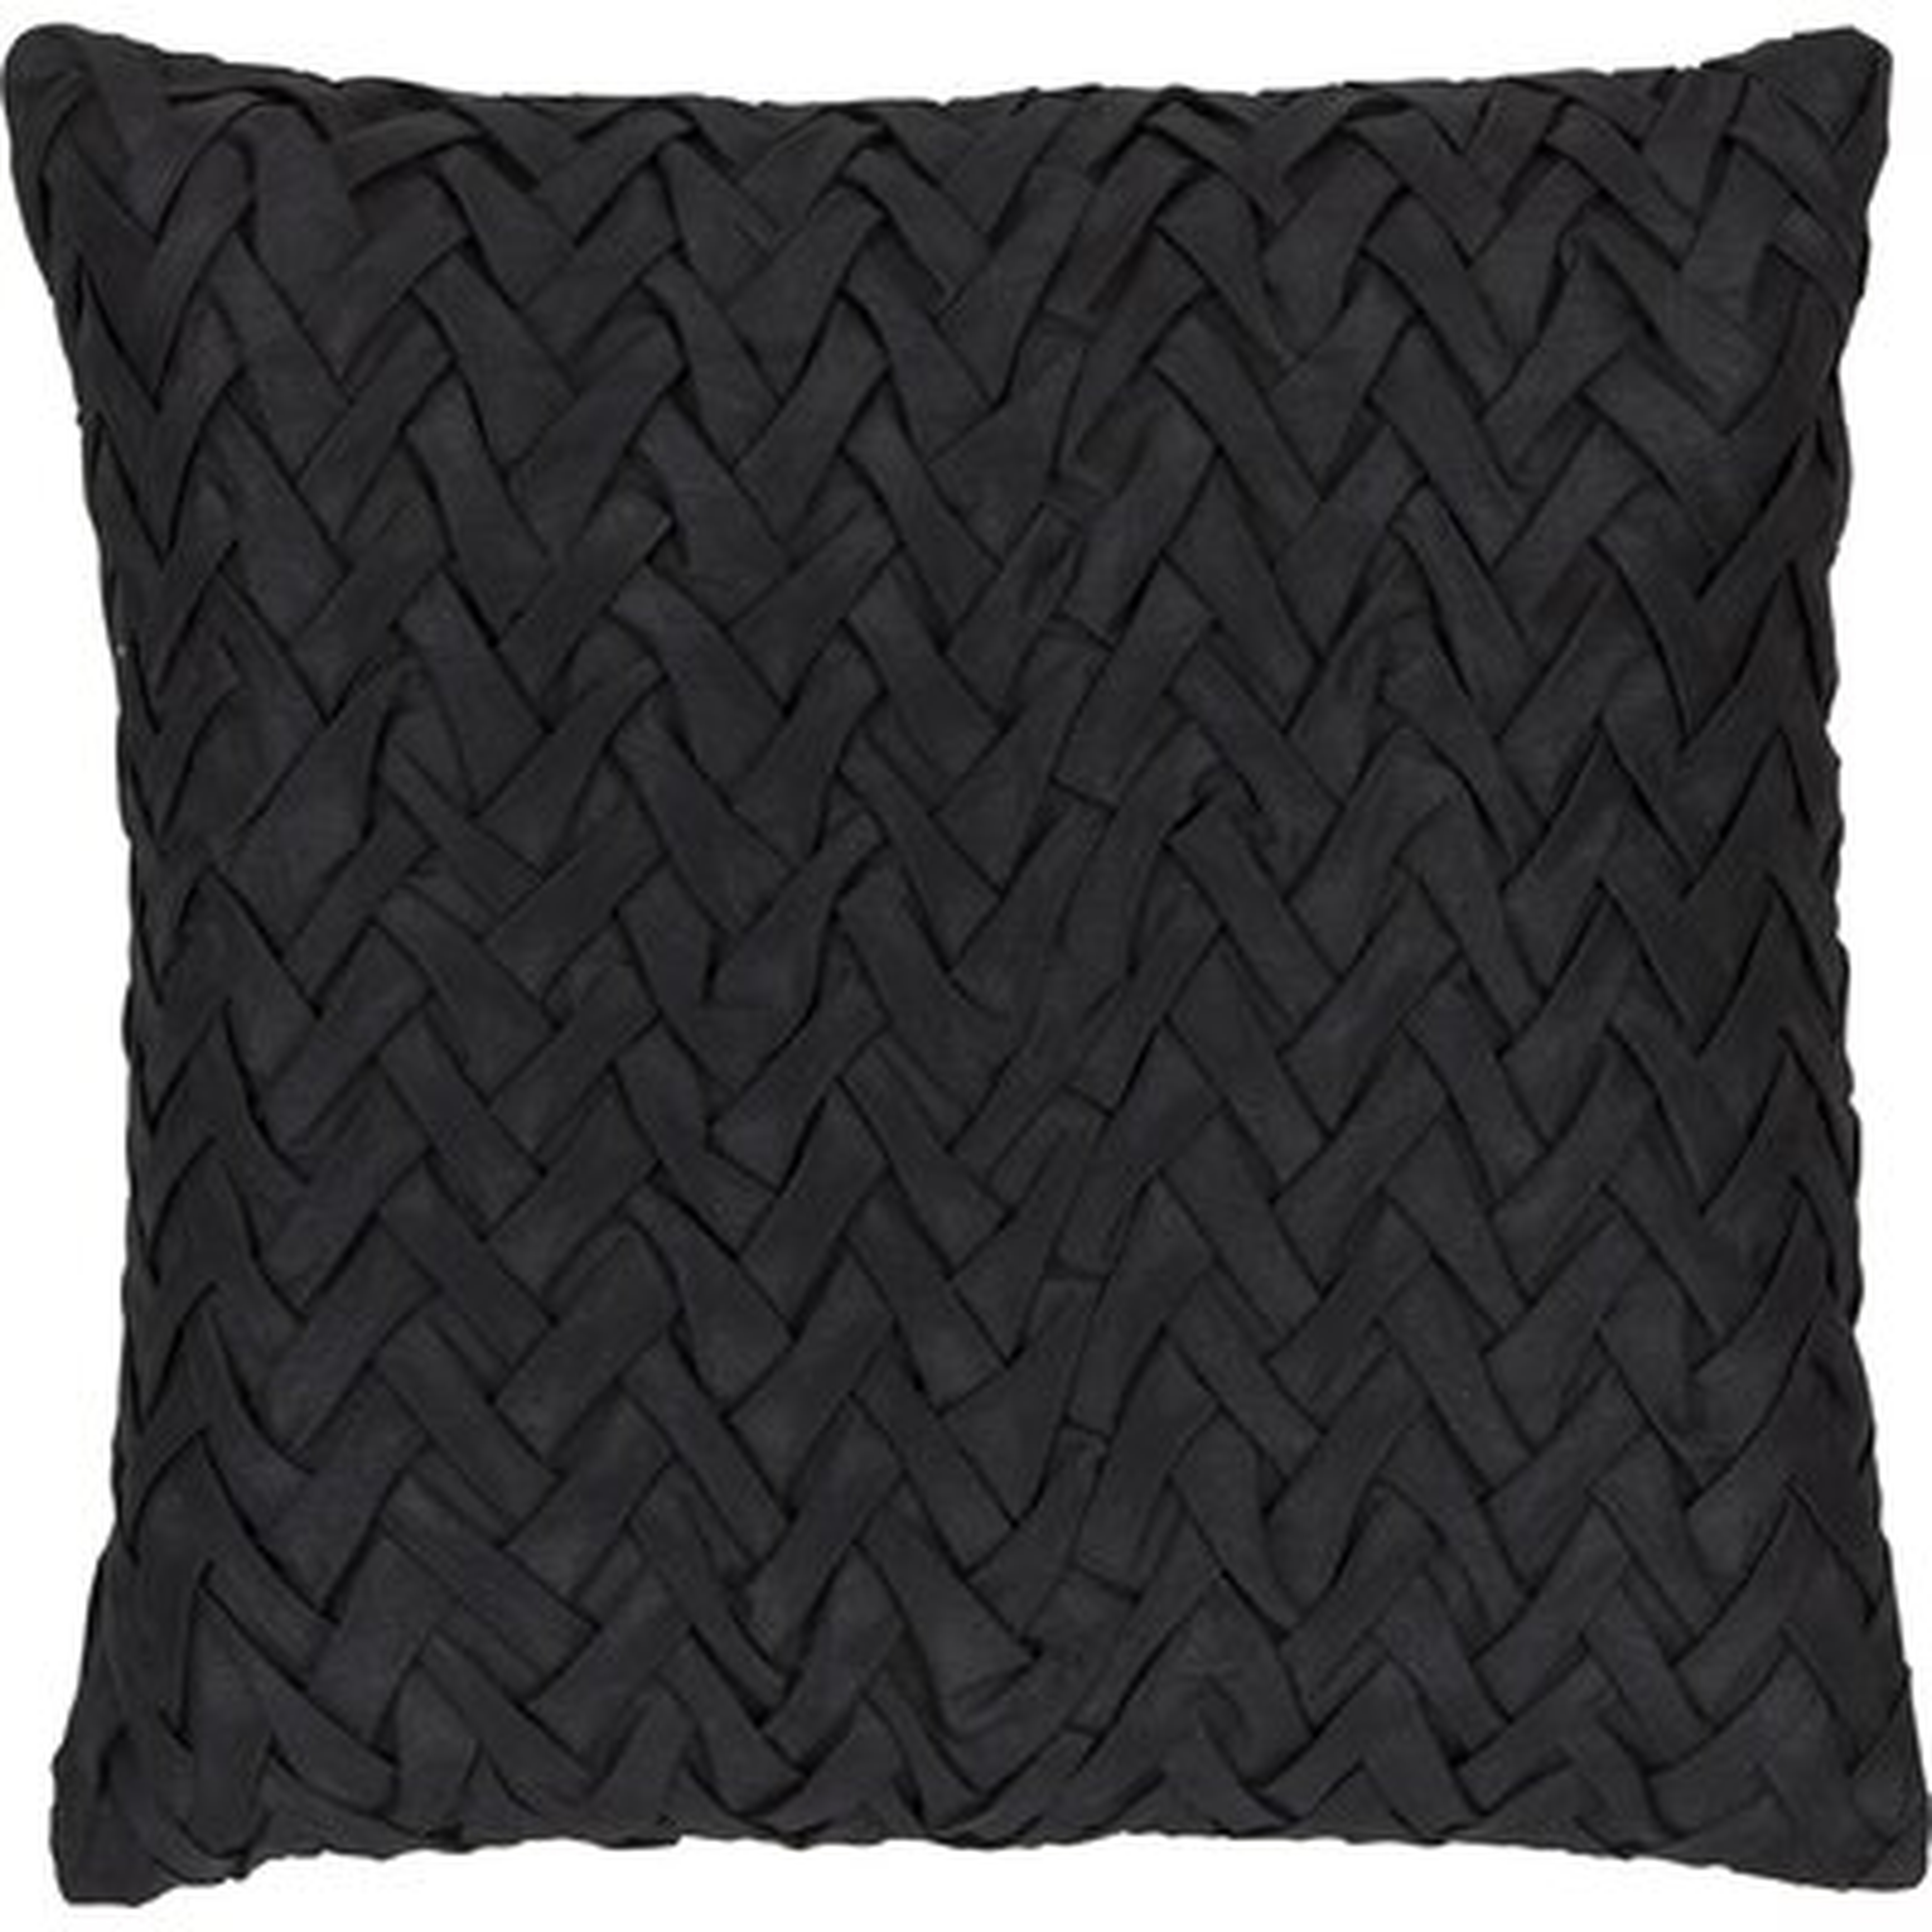 Chavers Black Cushion - Wayfair